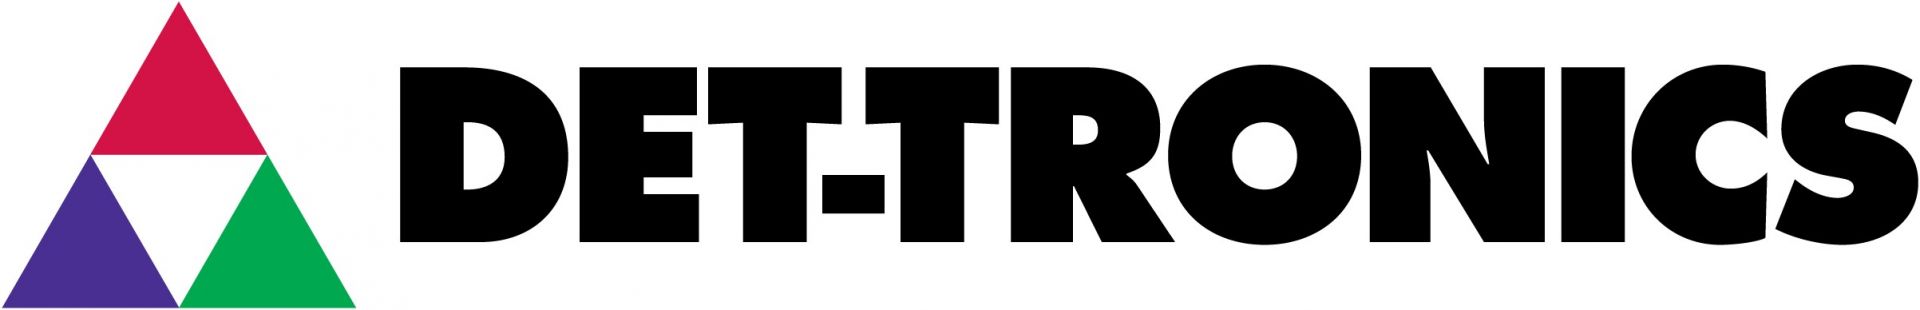 DET-TRONICS logo